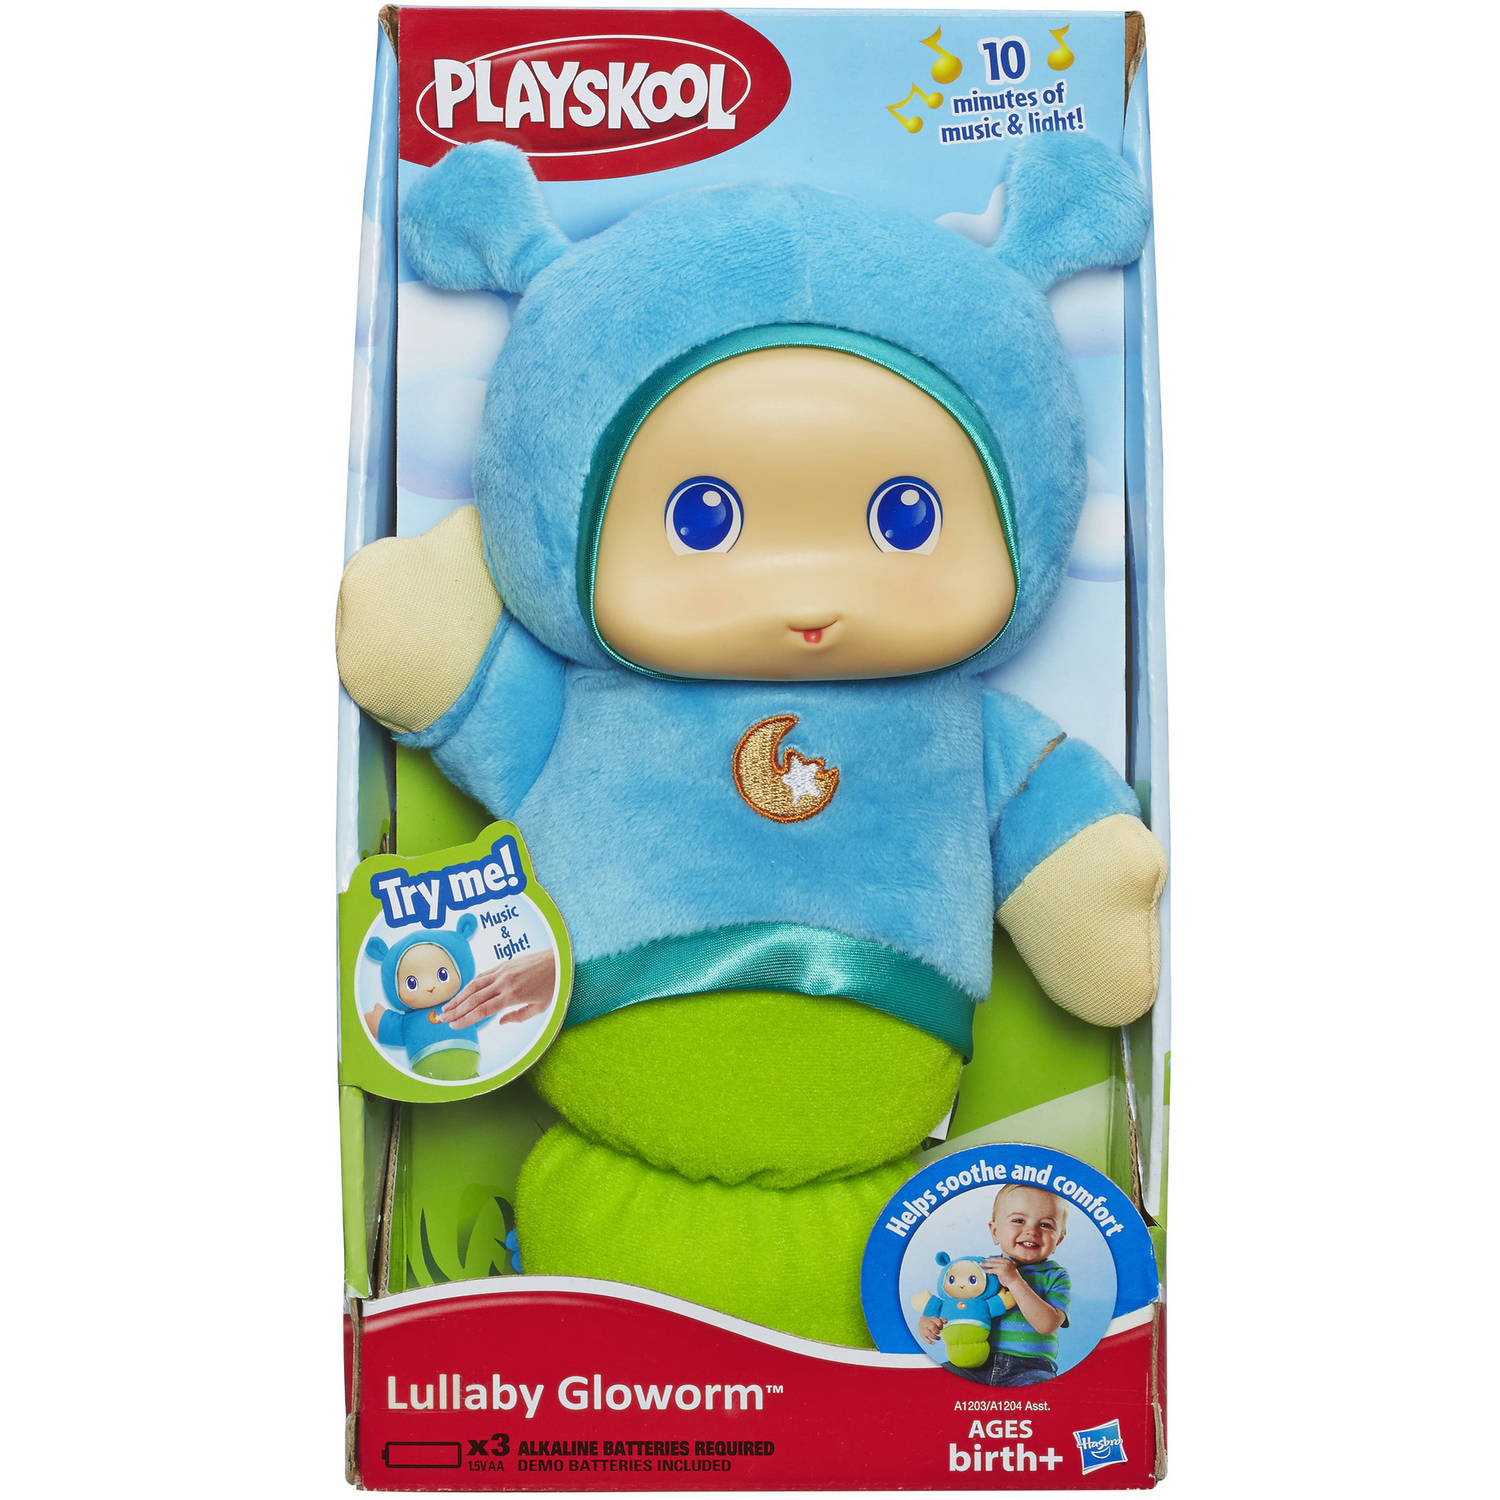 Playskool Play Favorites Lullaby Gloworm Toy, Blue - image 2 of 11